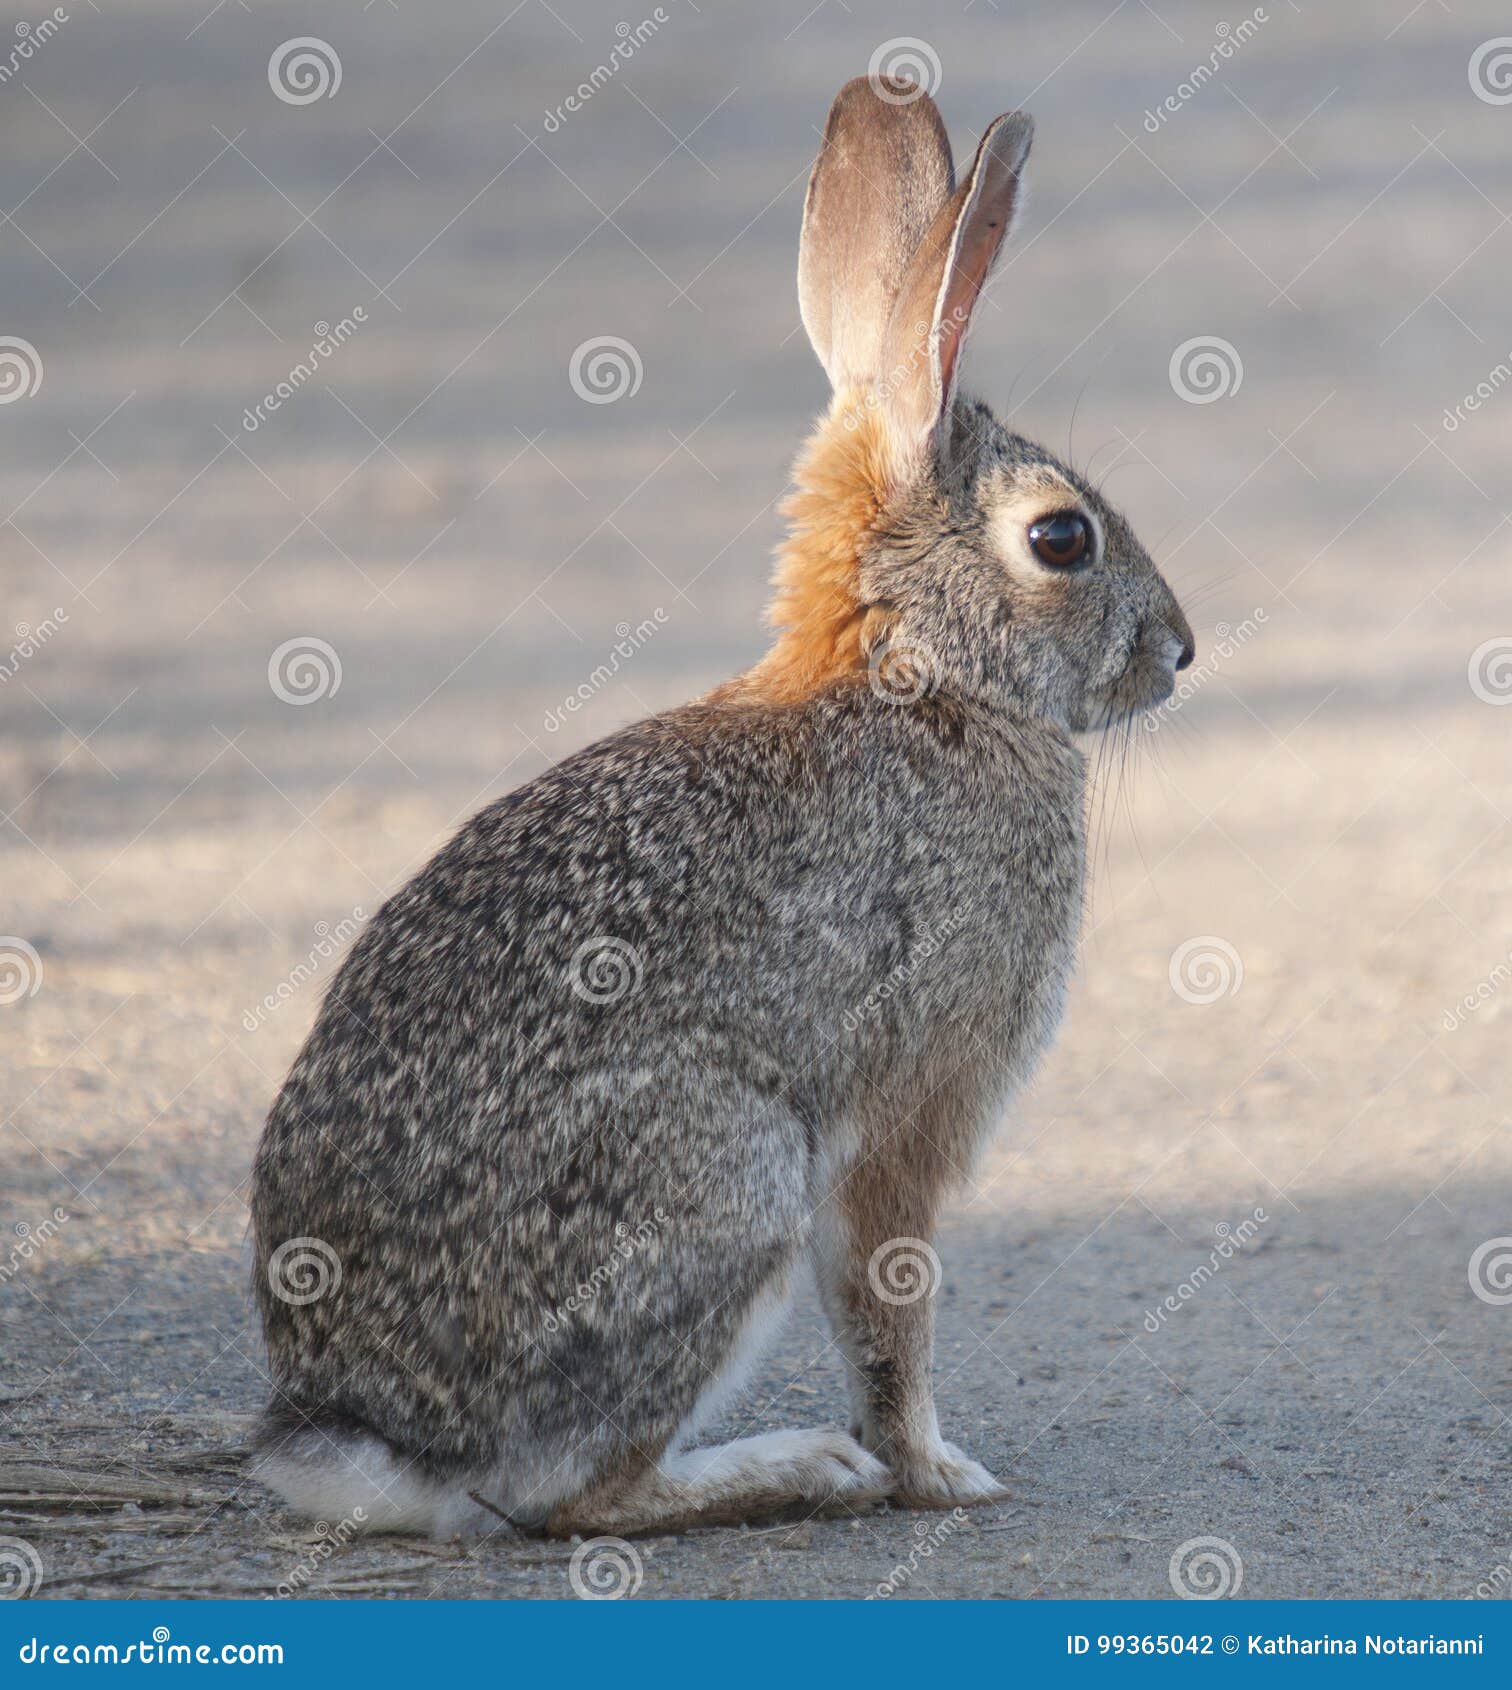 desert cottontail rabbit sylvilagus audubonii